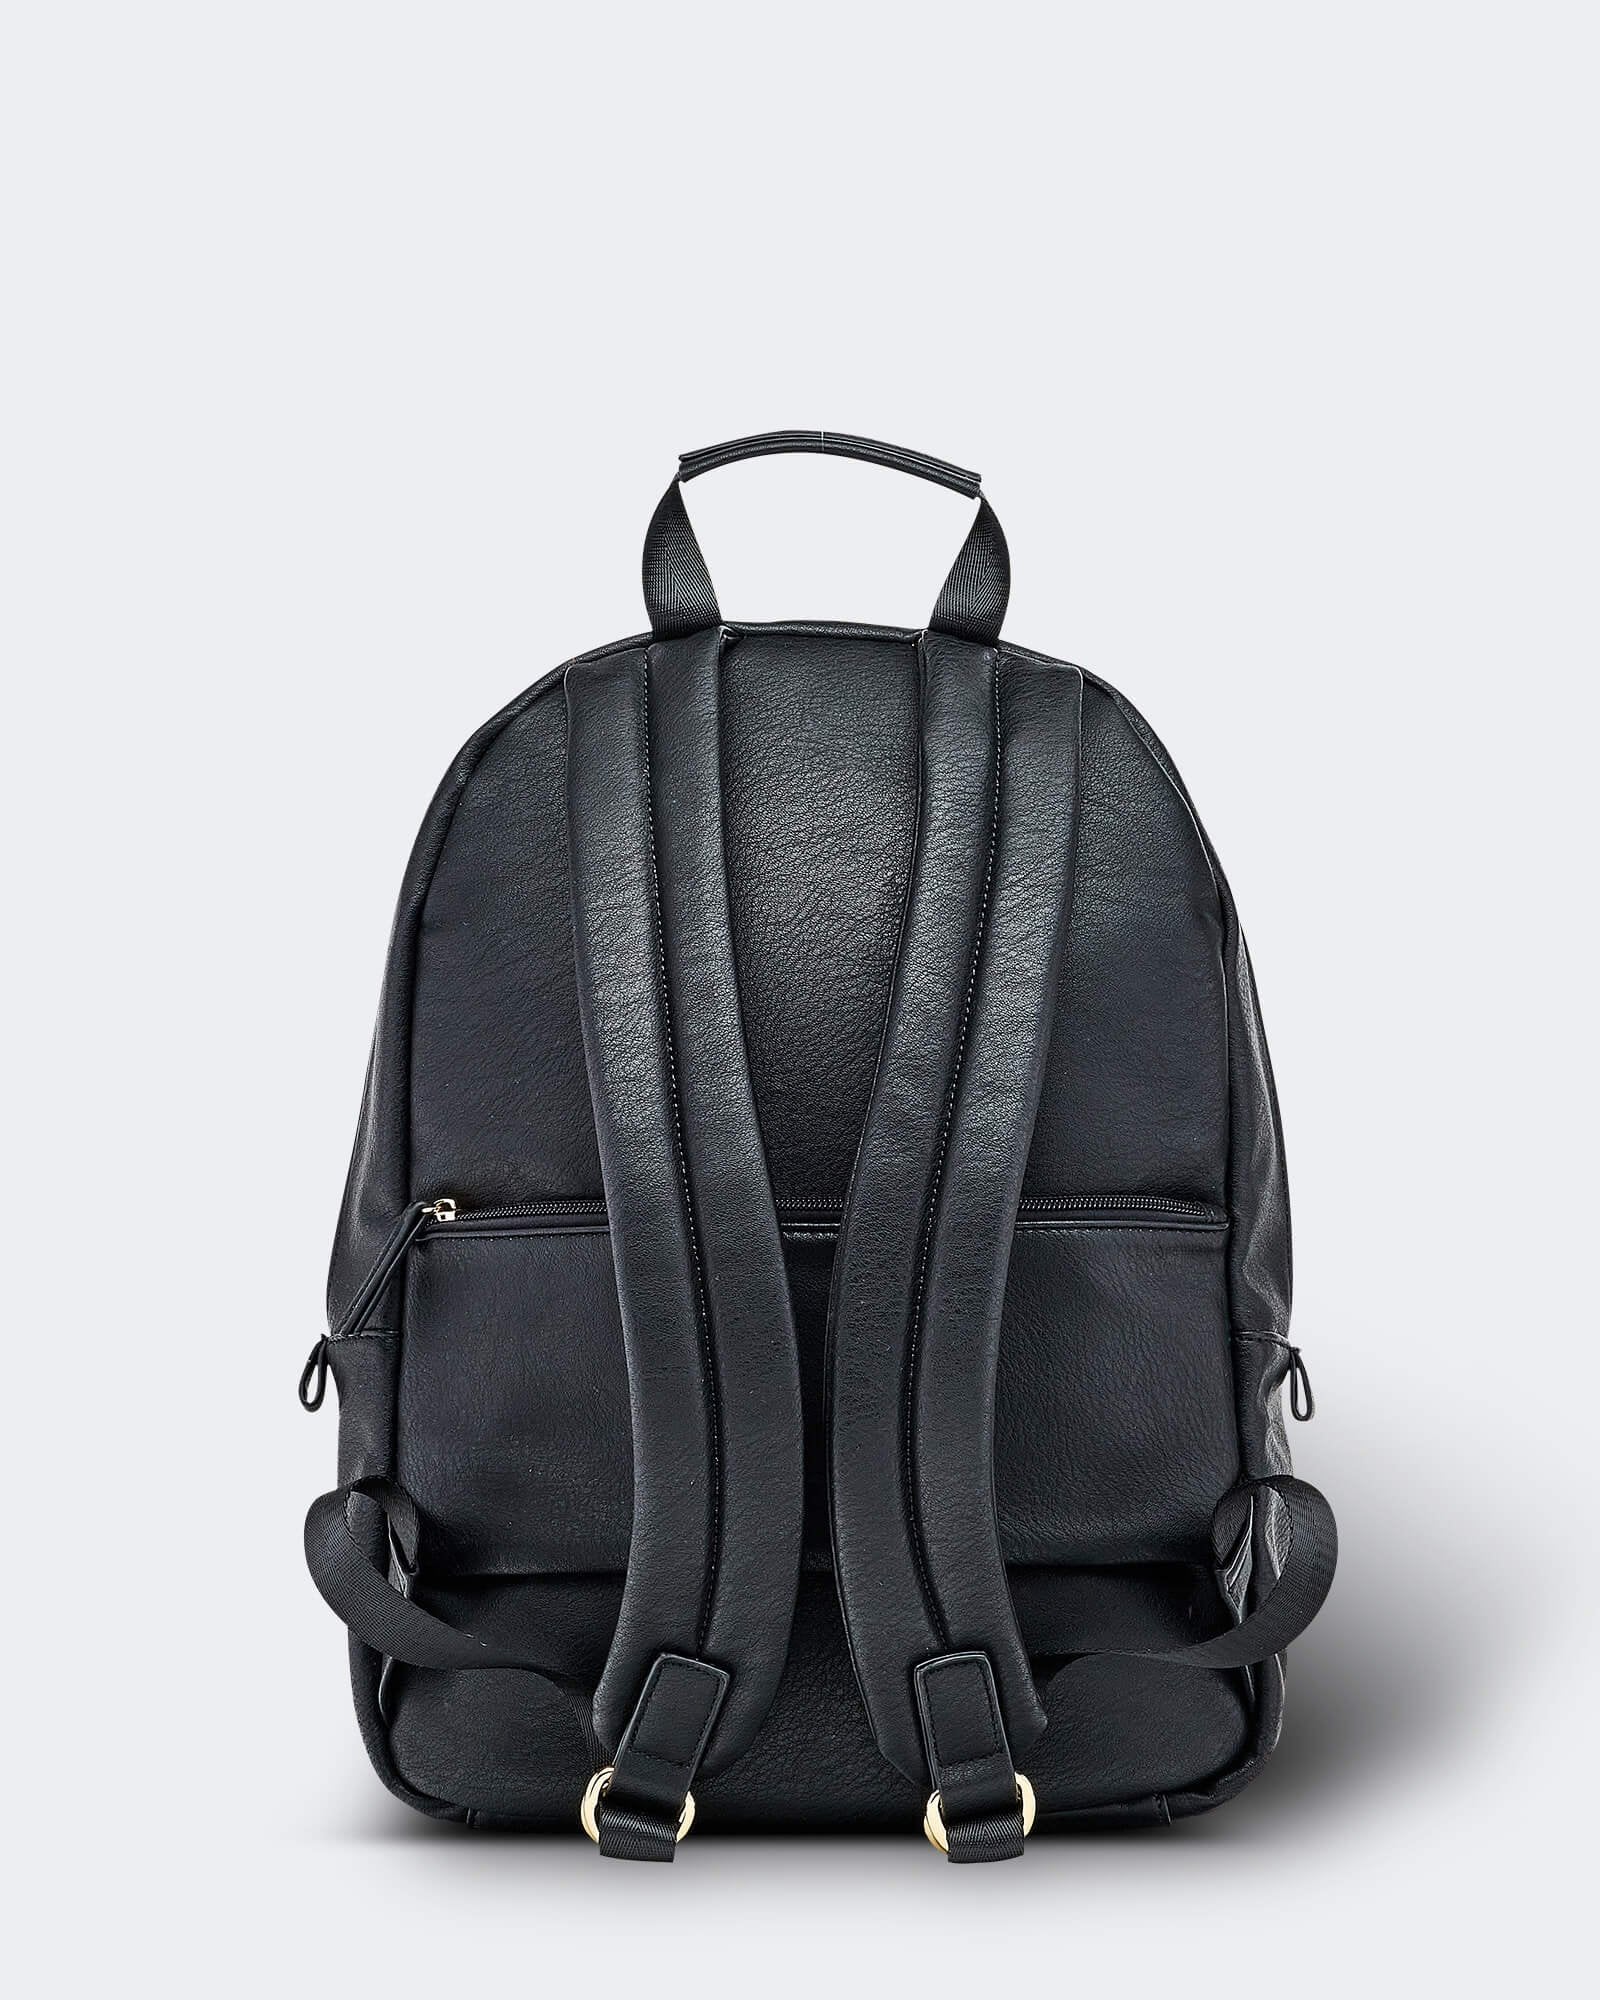 Louenhide Huxley Backpack - Black Accessories - Other Accessories - Handbags & Wallets by Louenhide | Grace the Boutique